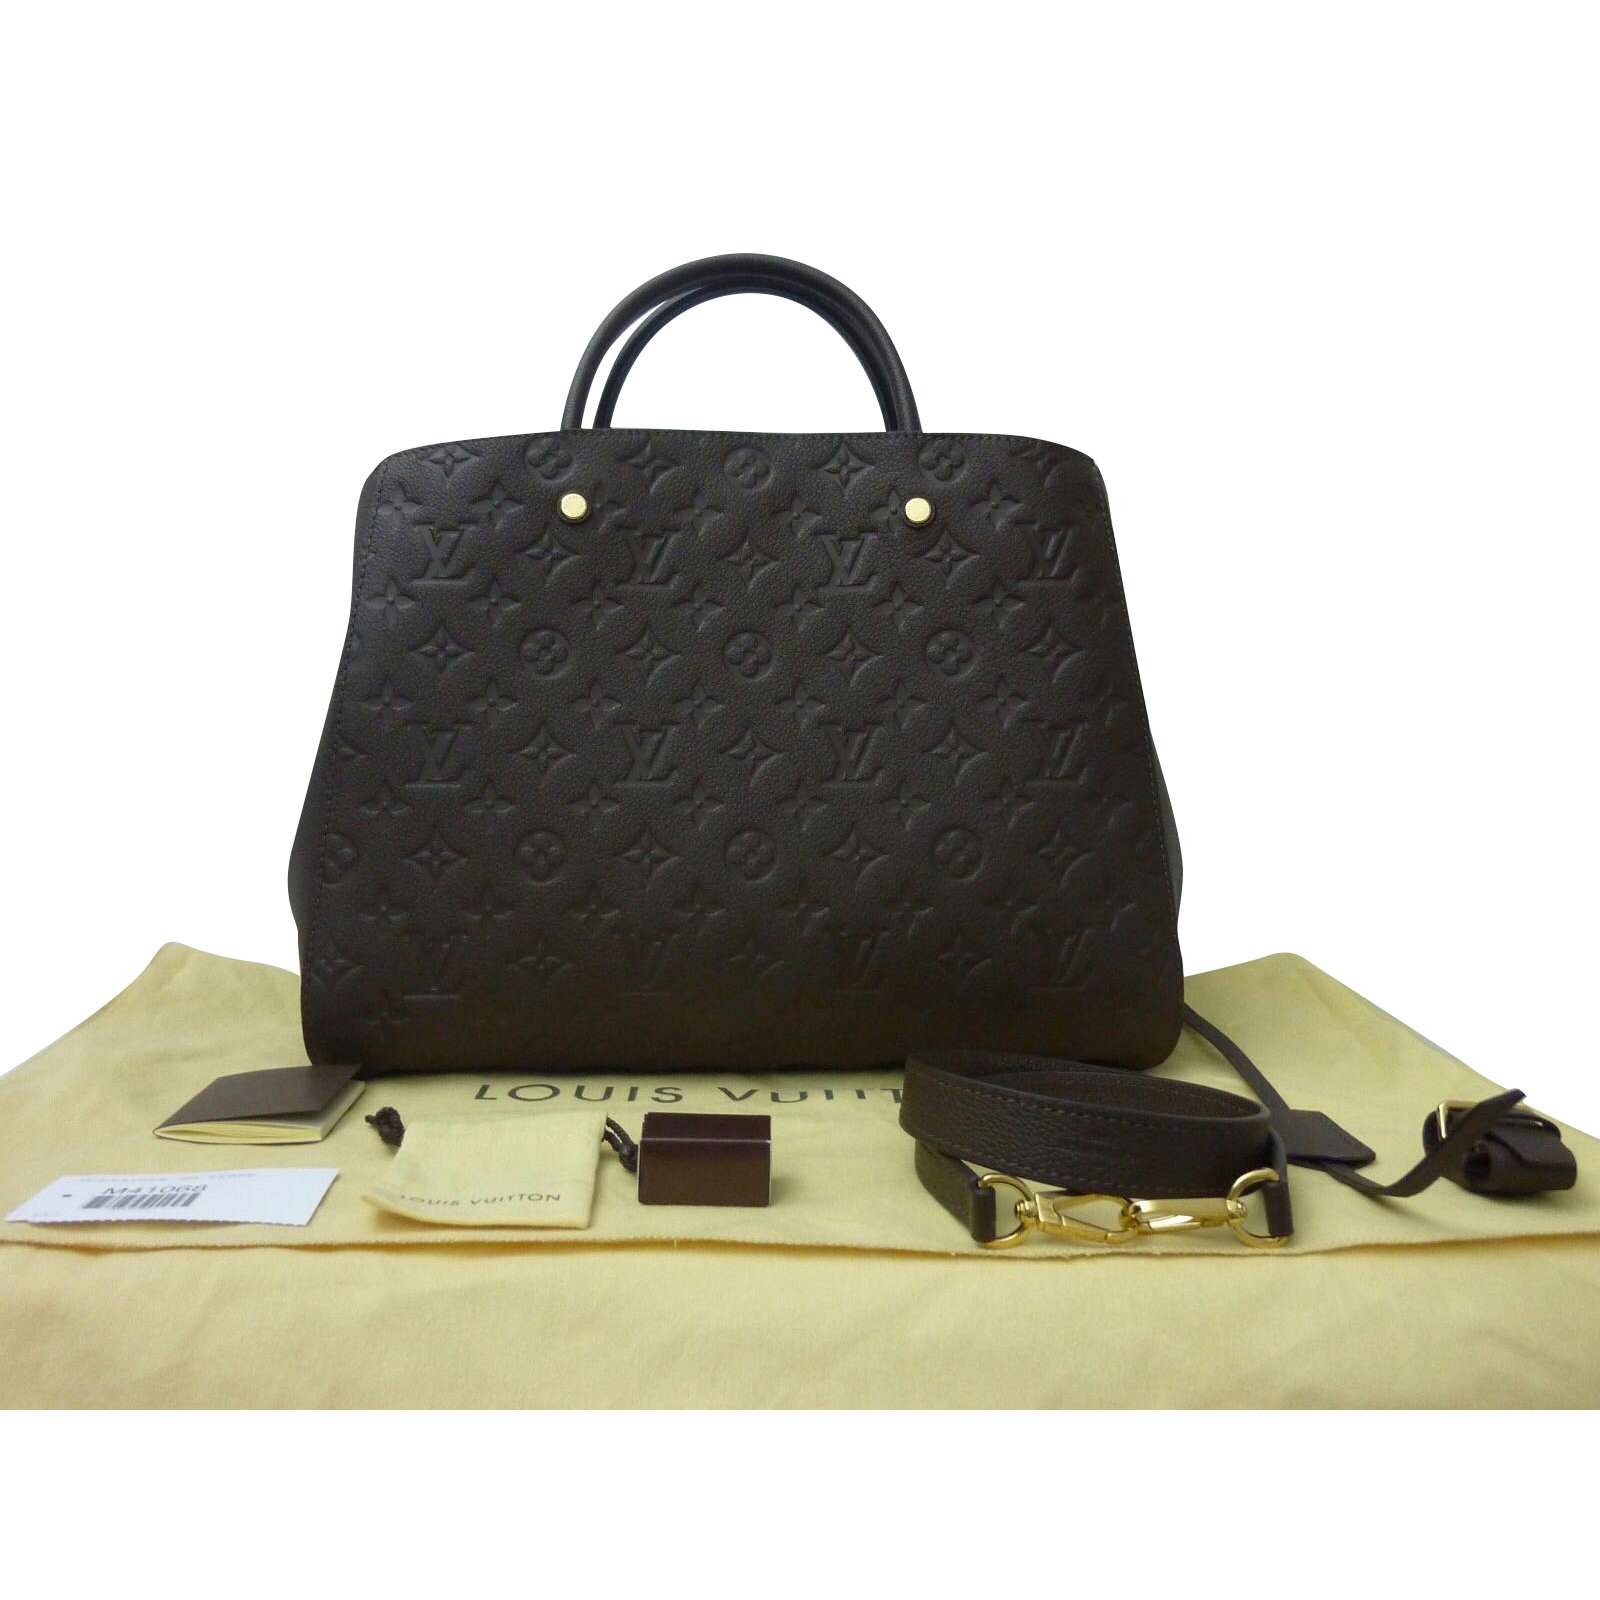 Black Louis Vuitton Epi Sac Montaigne Handbag